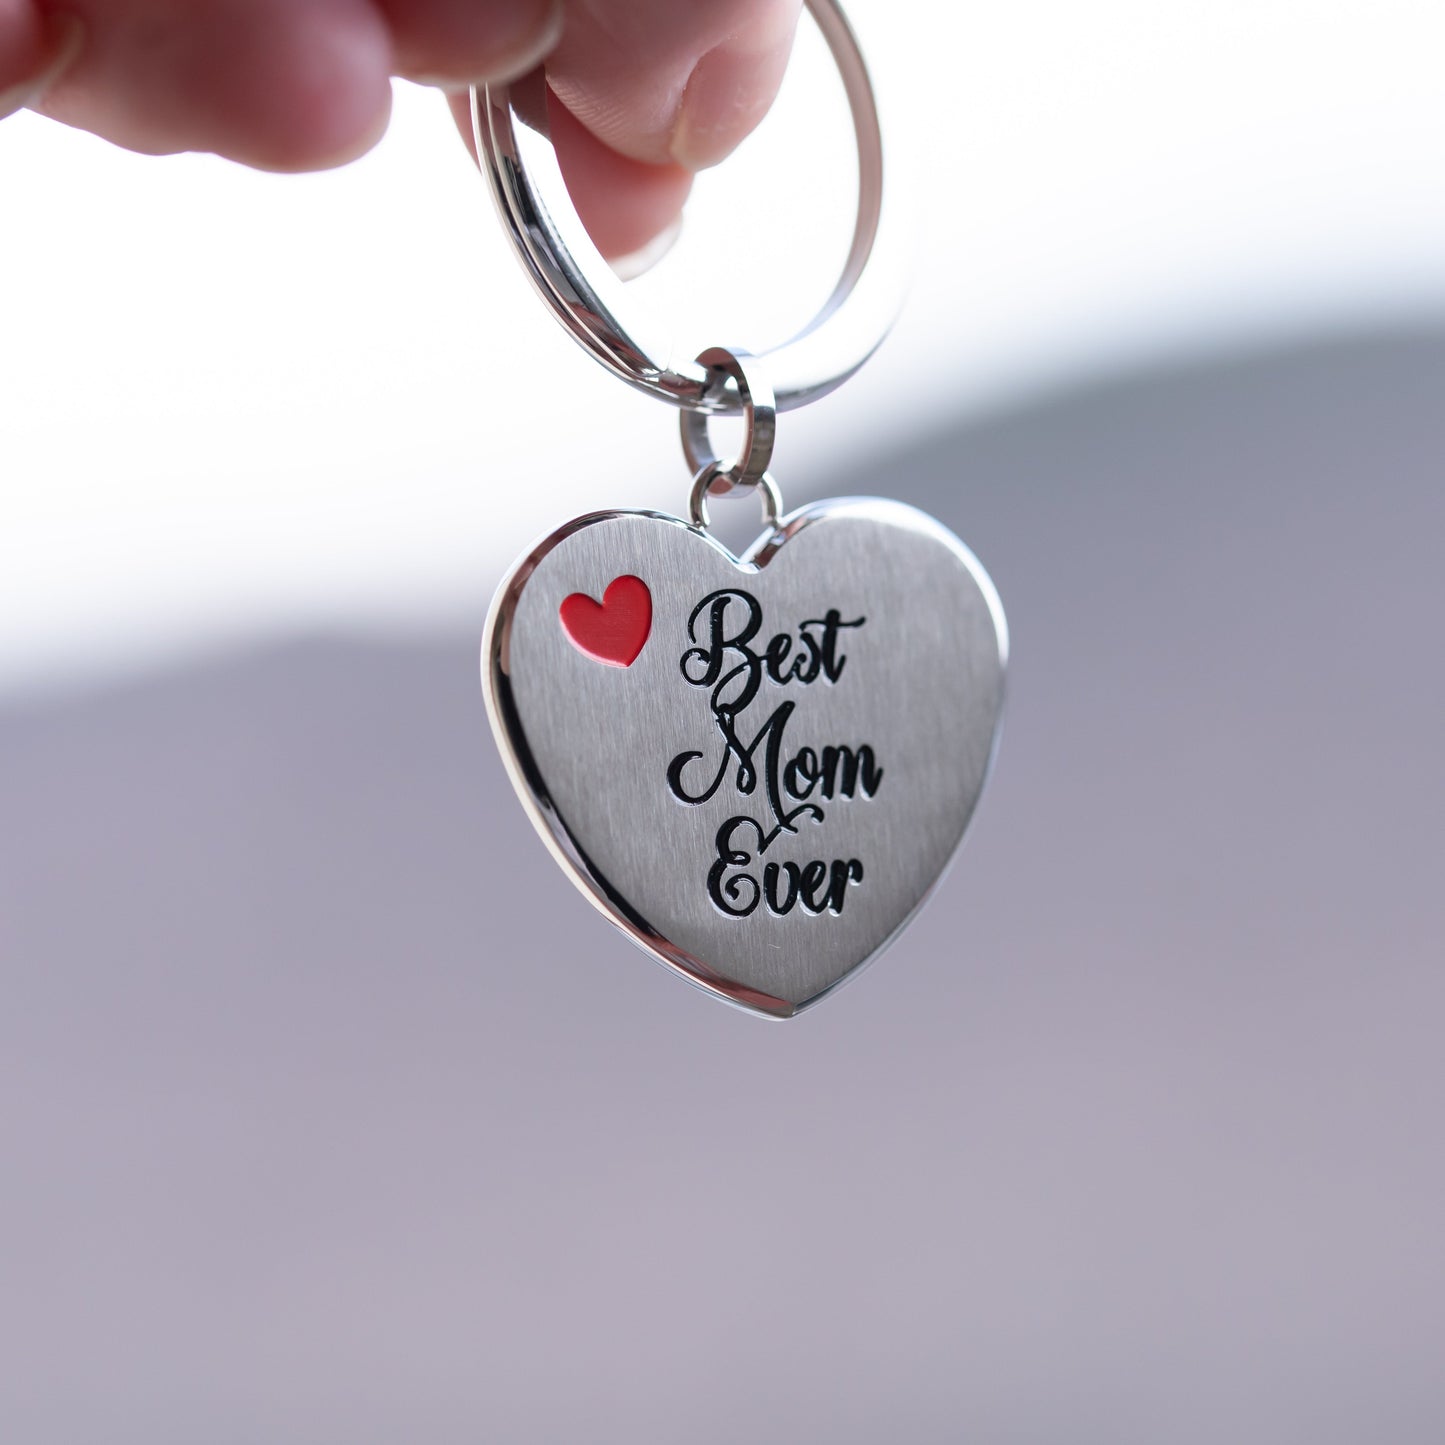 Best Mom Ever Heart Shaped Stainless Steel Keyring Sentimental Mother's Day or Birthday Gift for Women